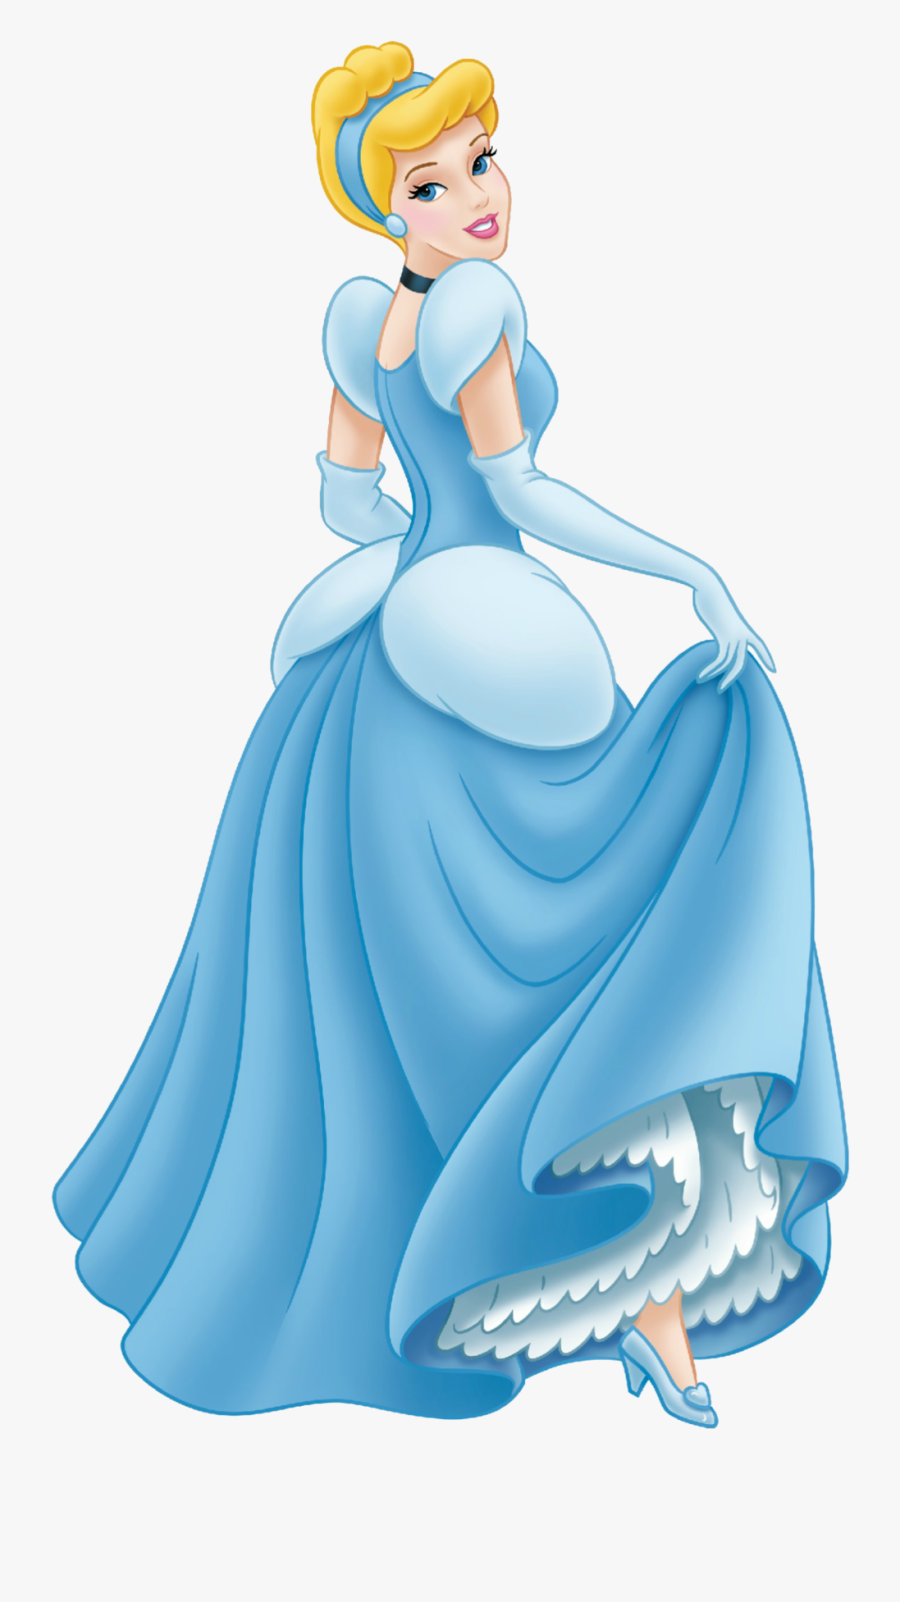 Disney Princess Cinderella Vector Clip Art Library | Images and Photos ...